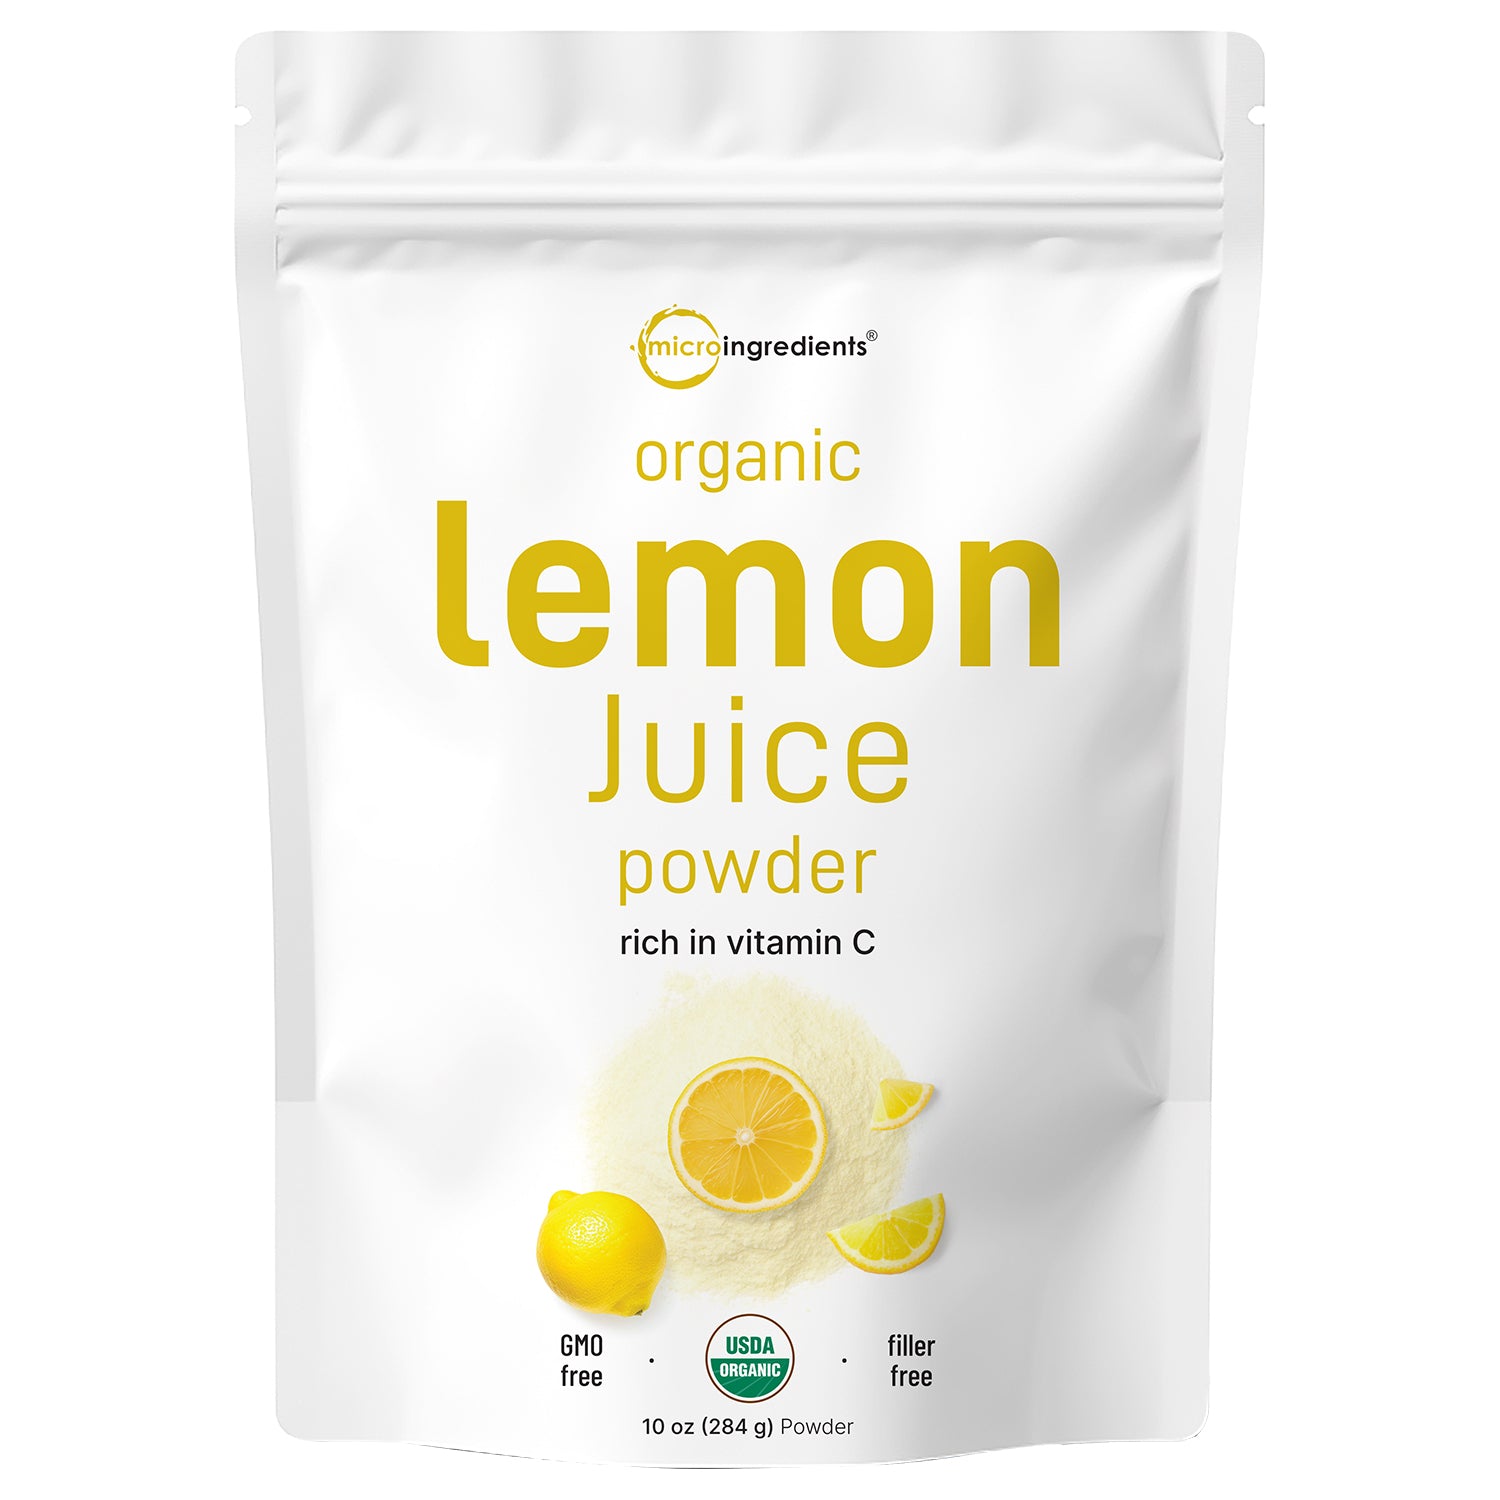 Lemon Juice Powder – XPRS Nutra